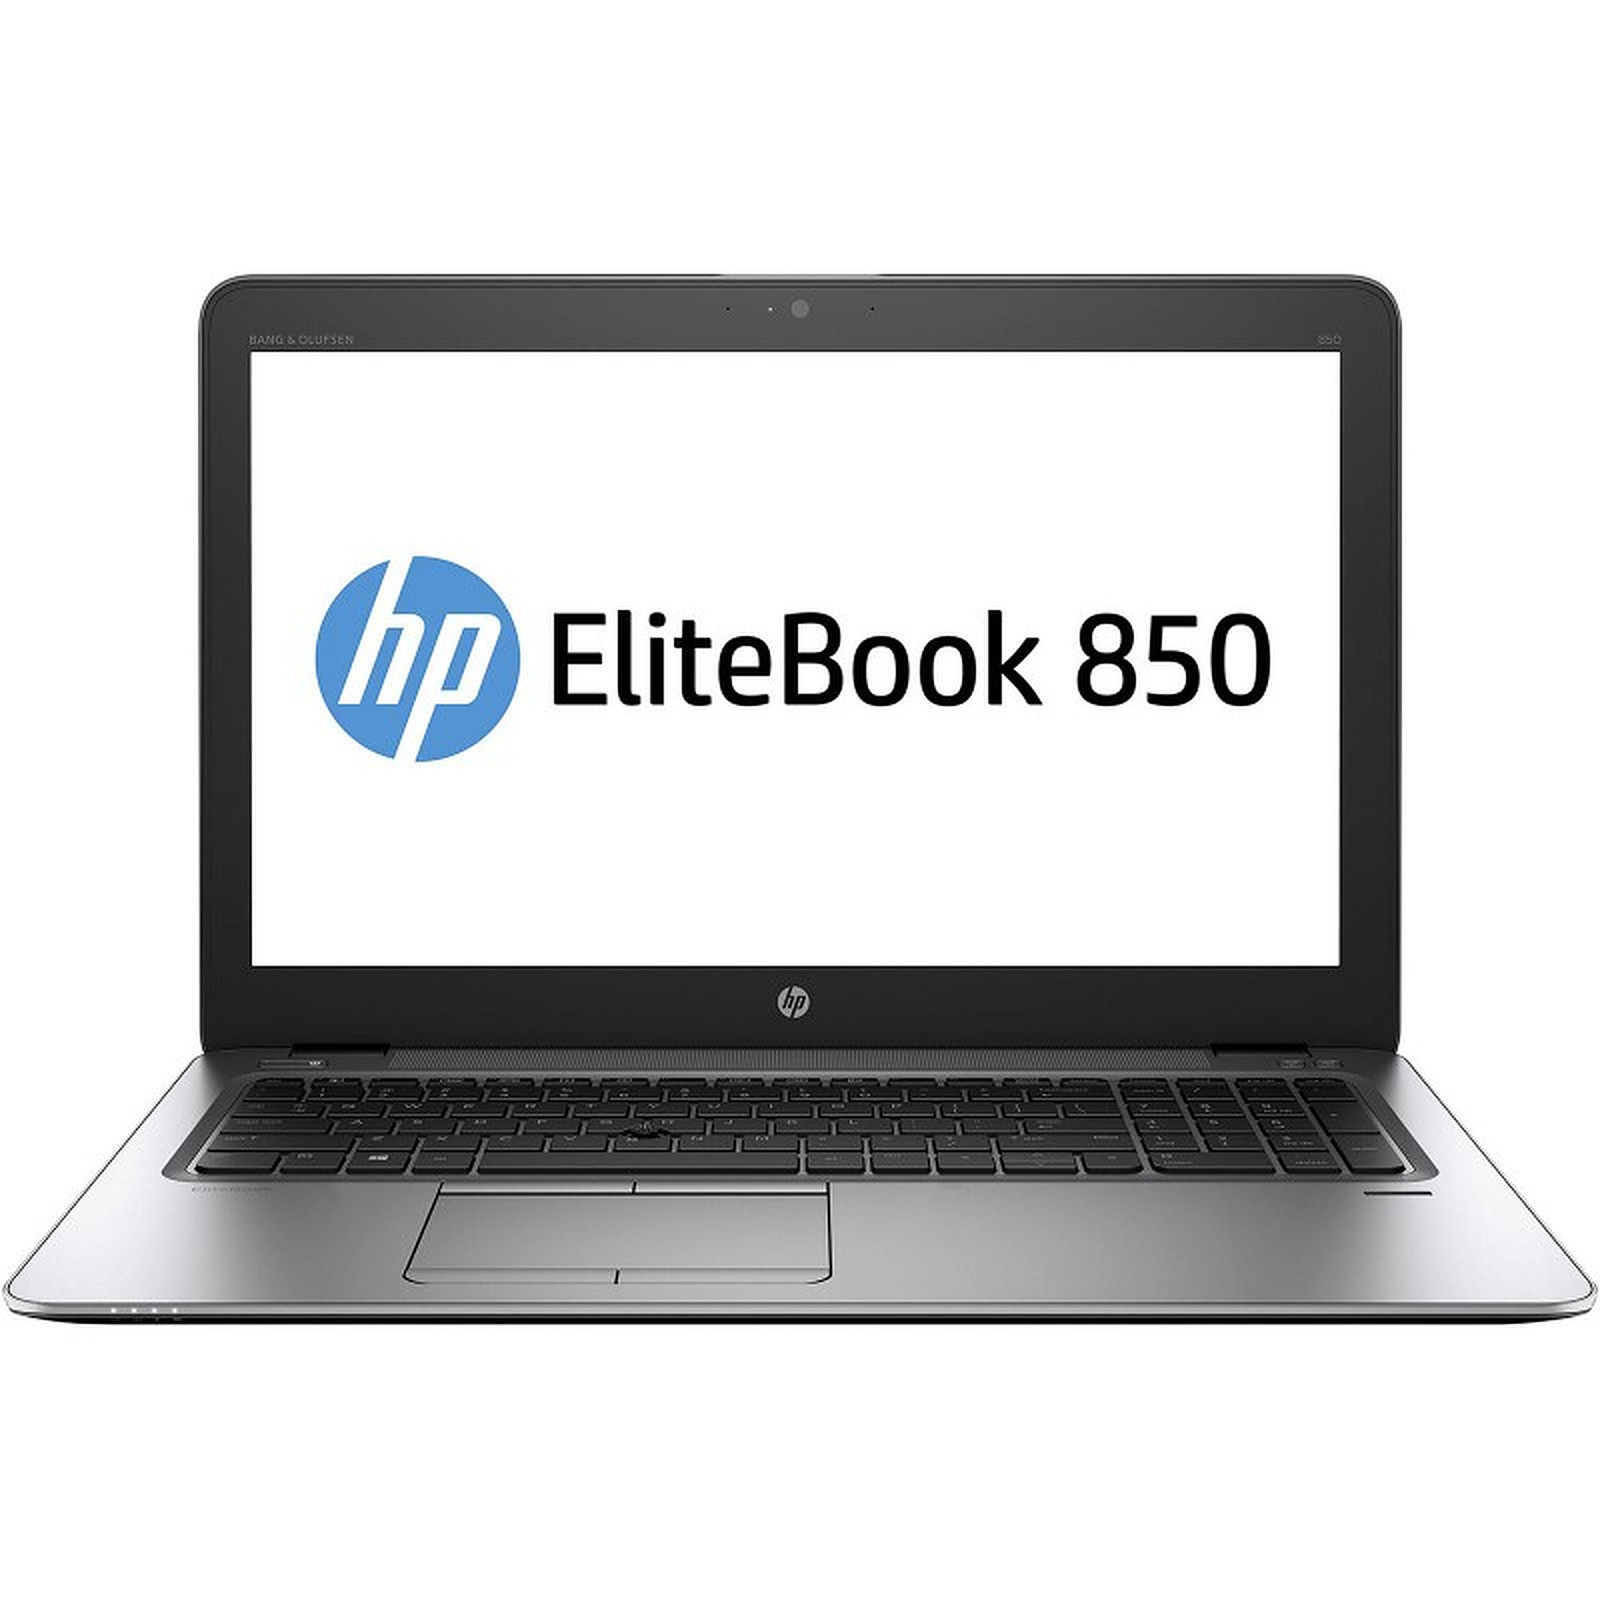 HP EliteBook 850 G3 (L3D23AV-B-6217) · Reconditionne - PC portable reconditionne HP